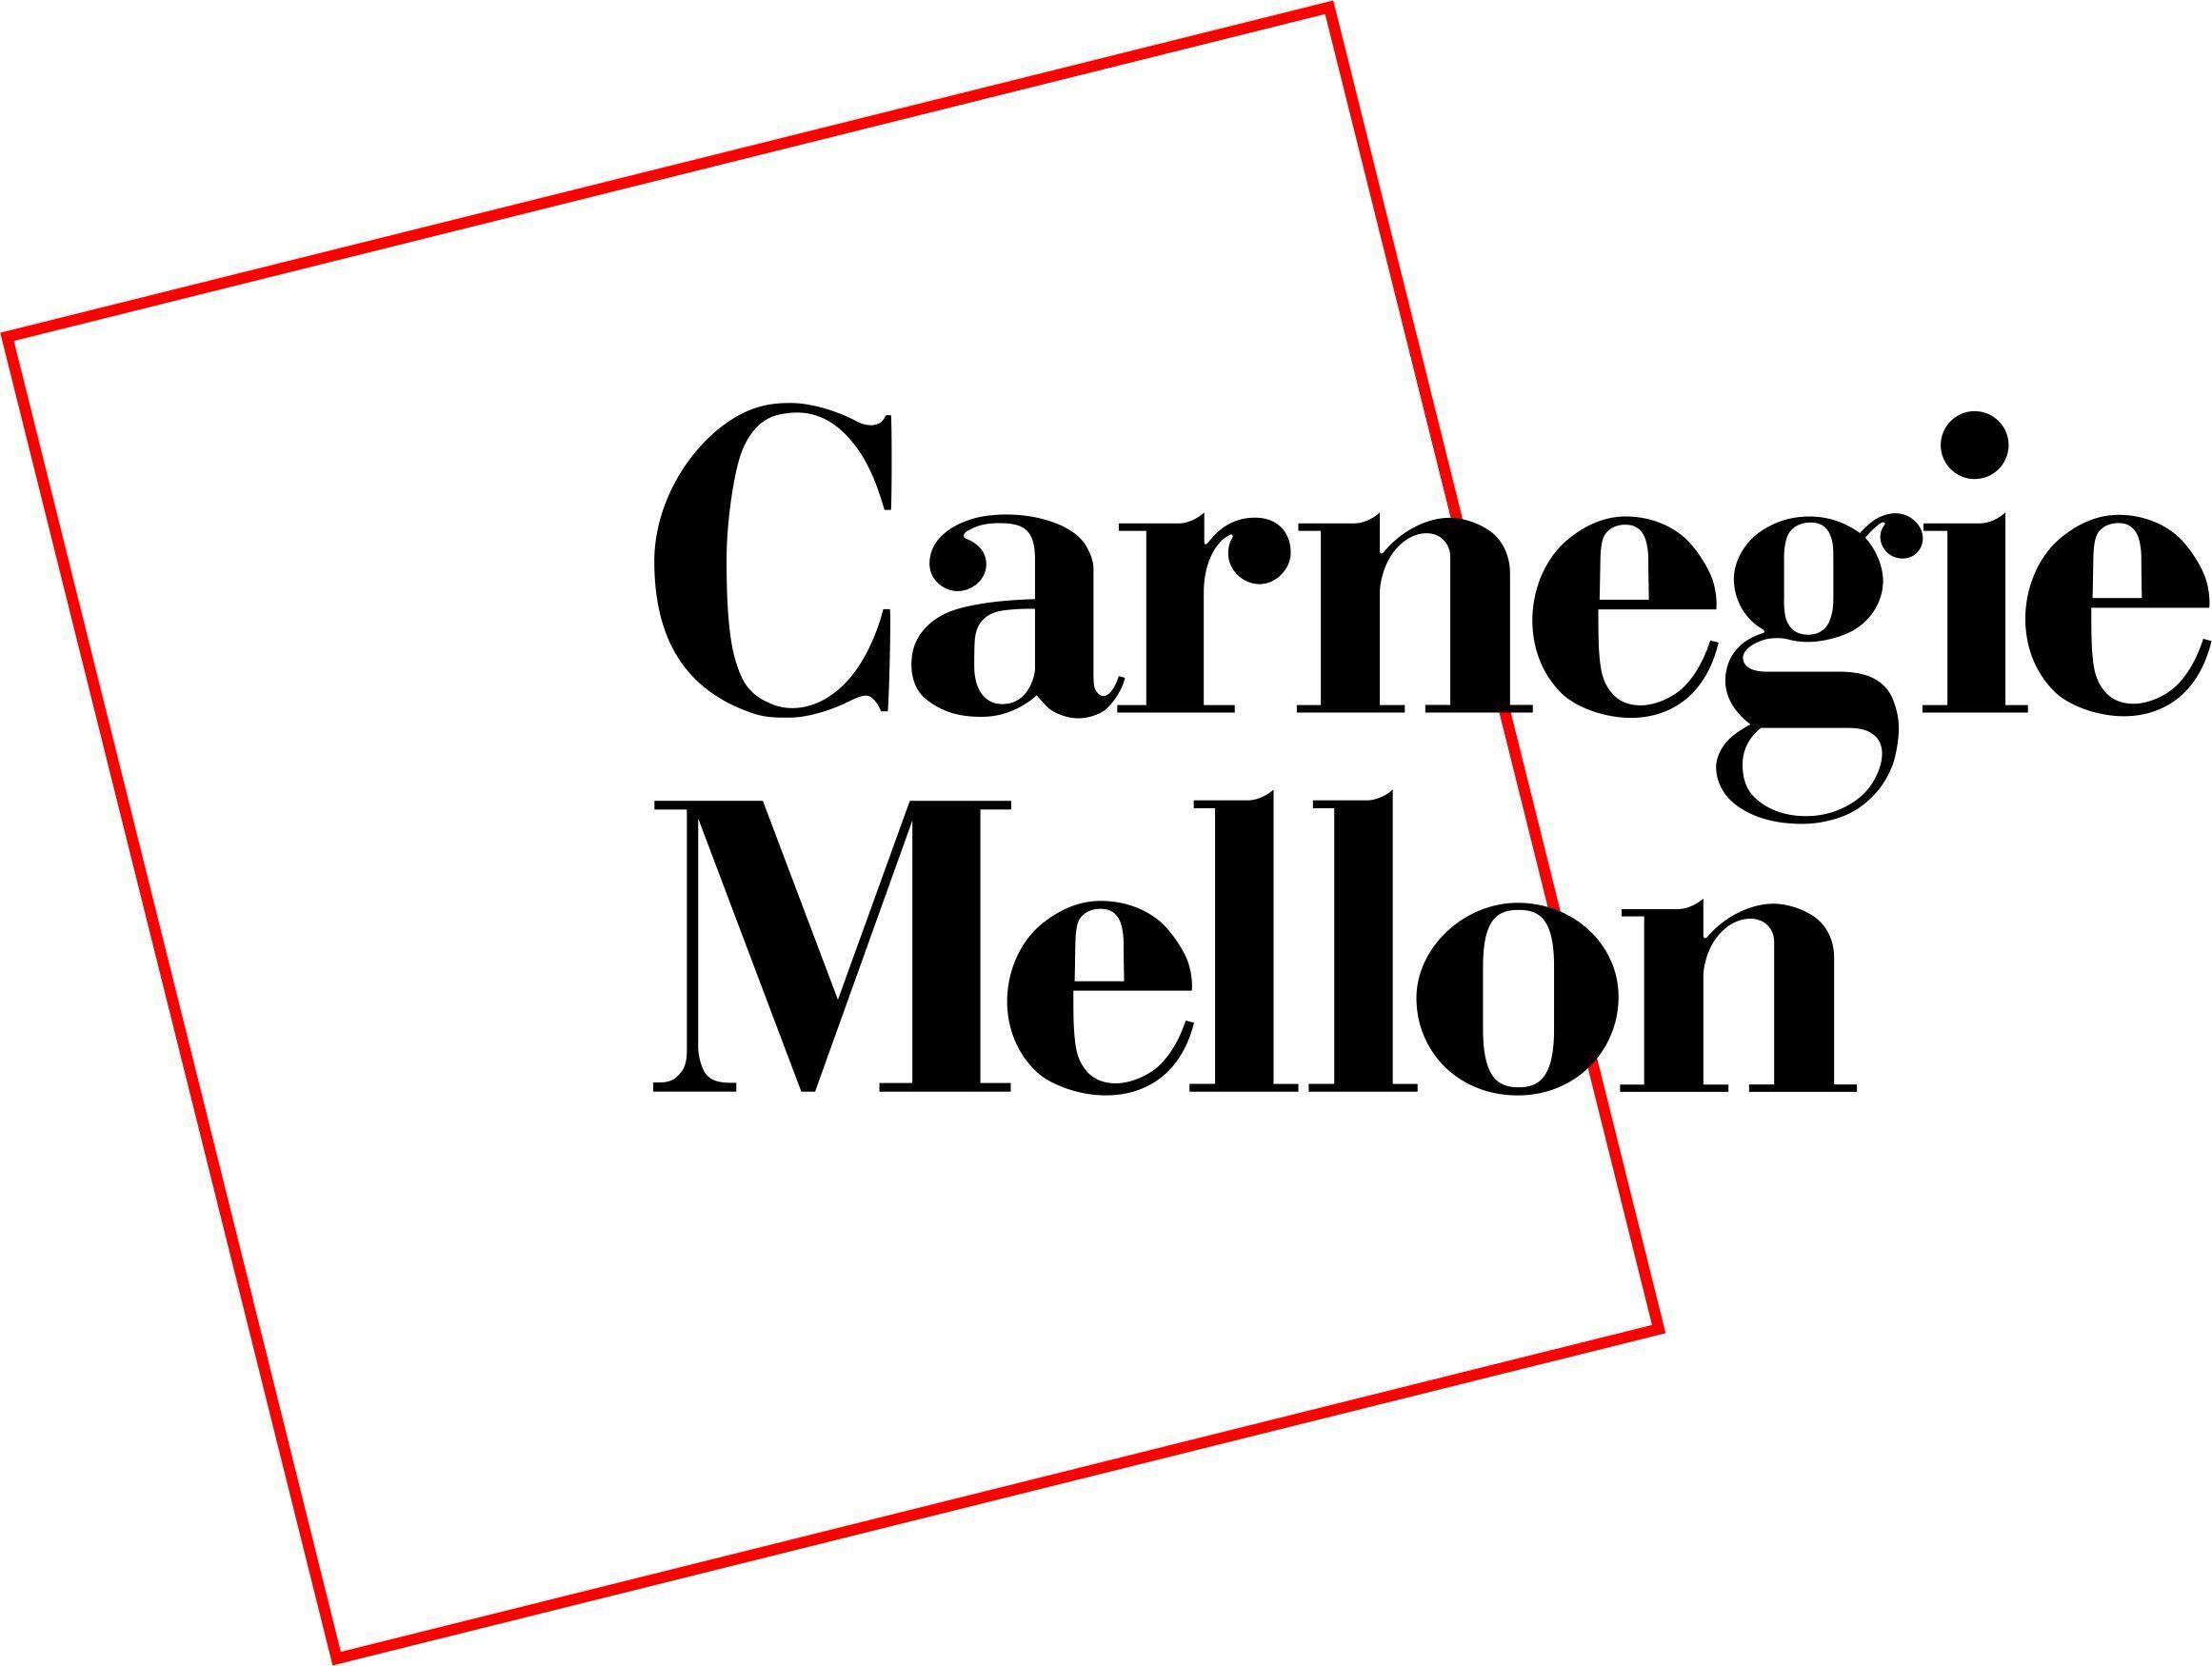 Carnegie Mellon Logo - The Tilted Square